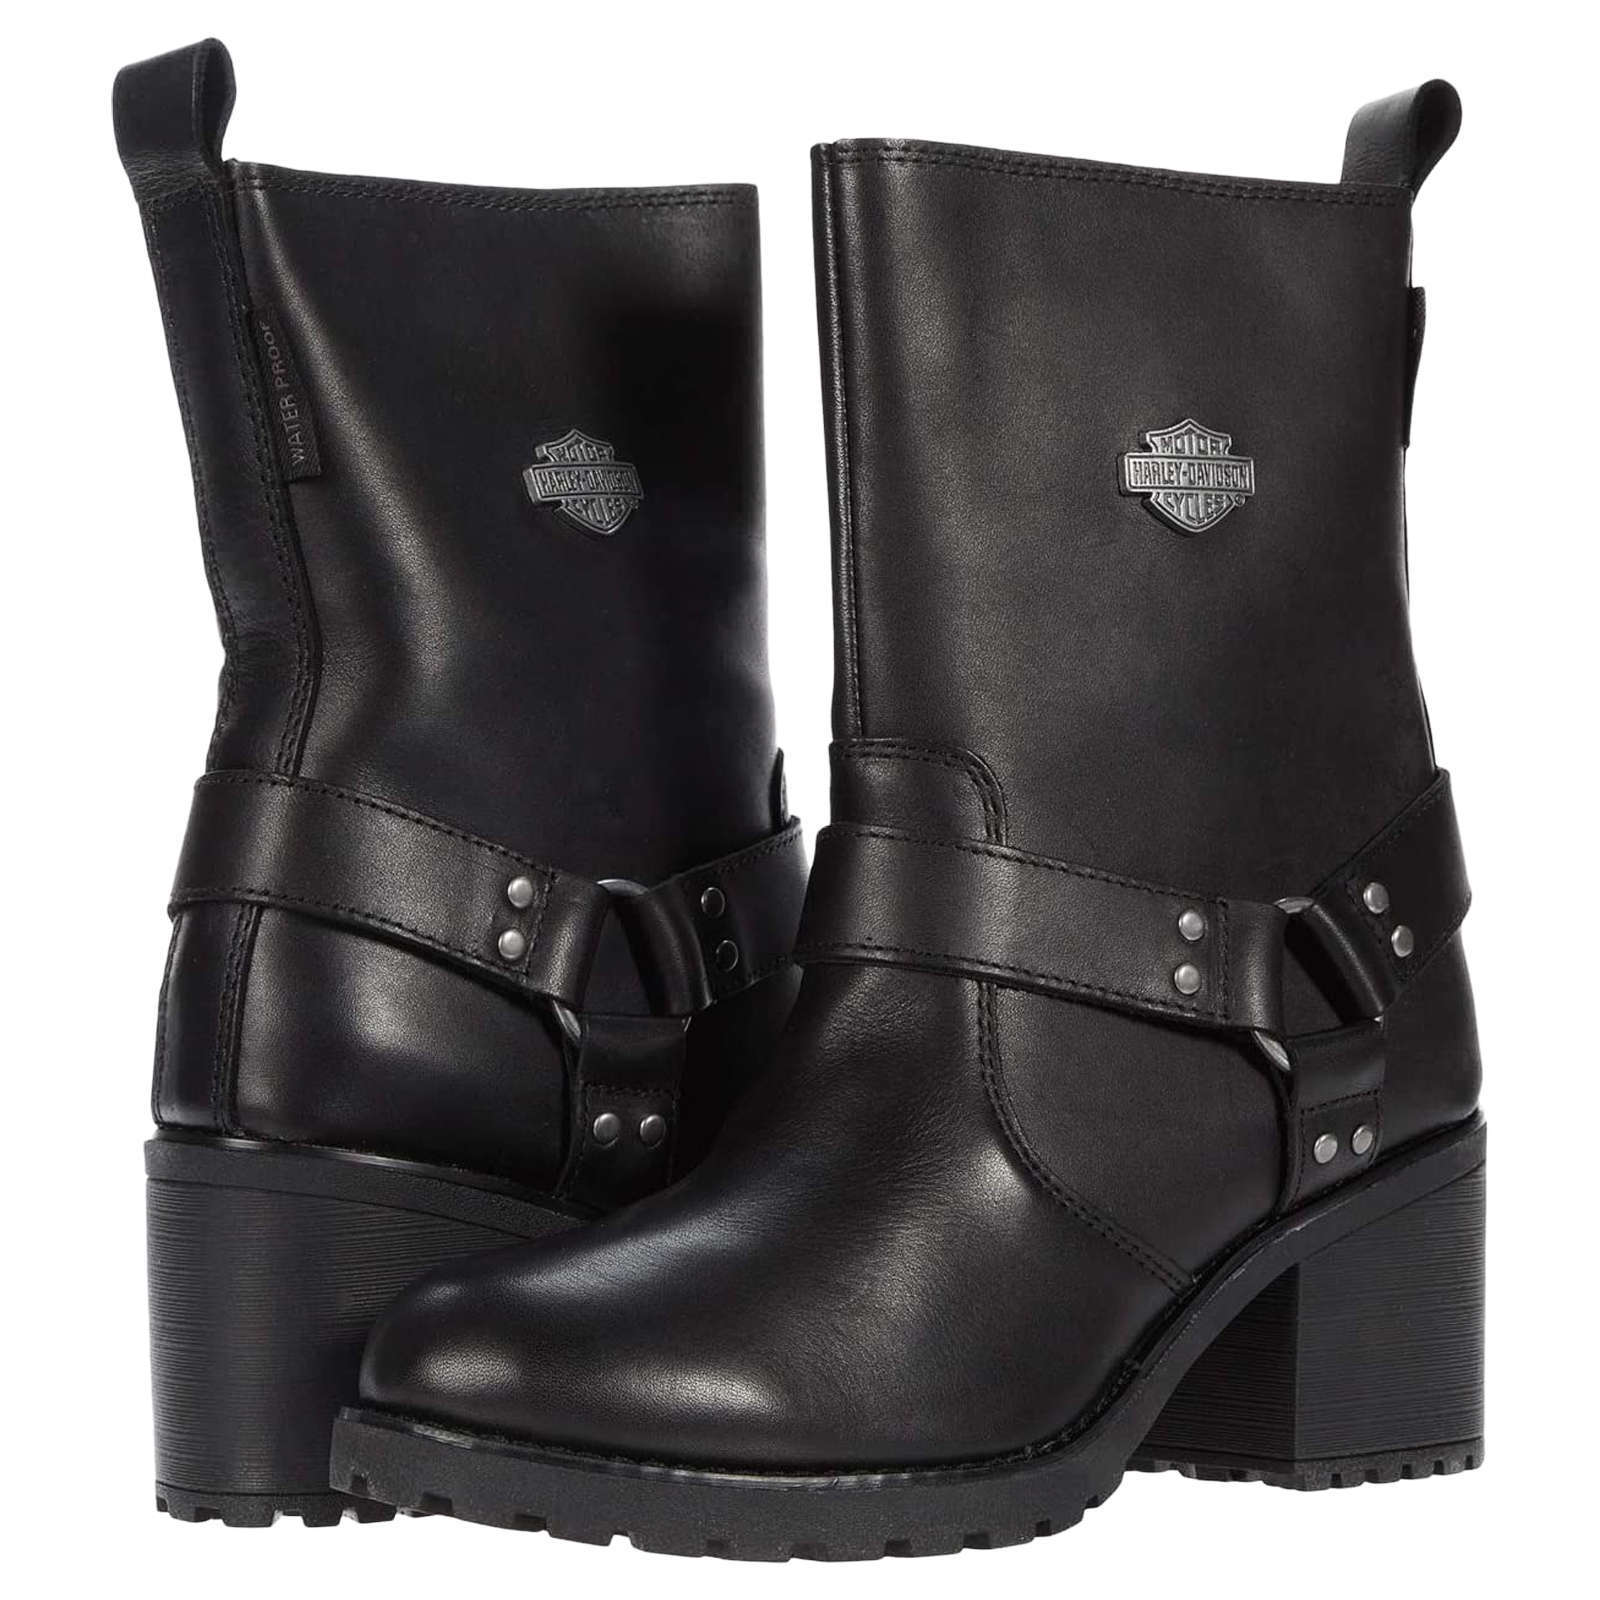 Harley Davidson Howell Waterproof Full Grain Leather Women's Block Heel Riding Boots#color_black